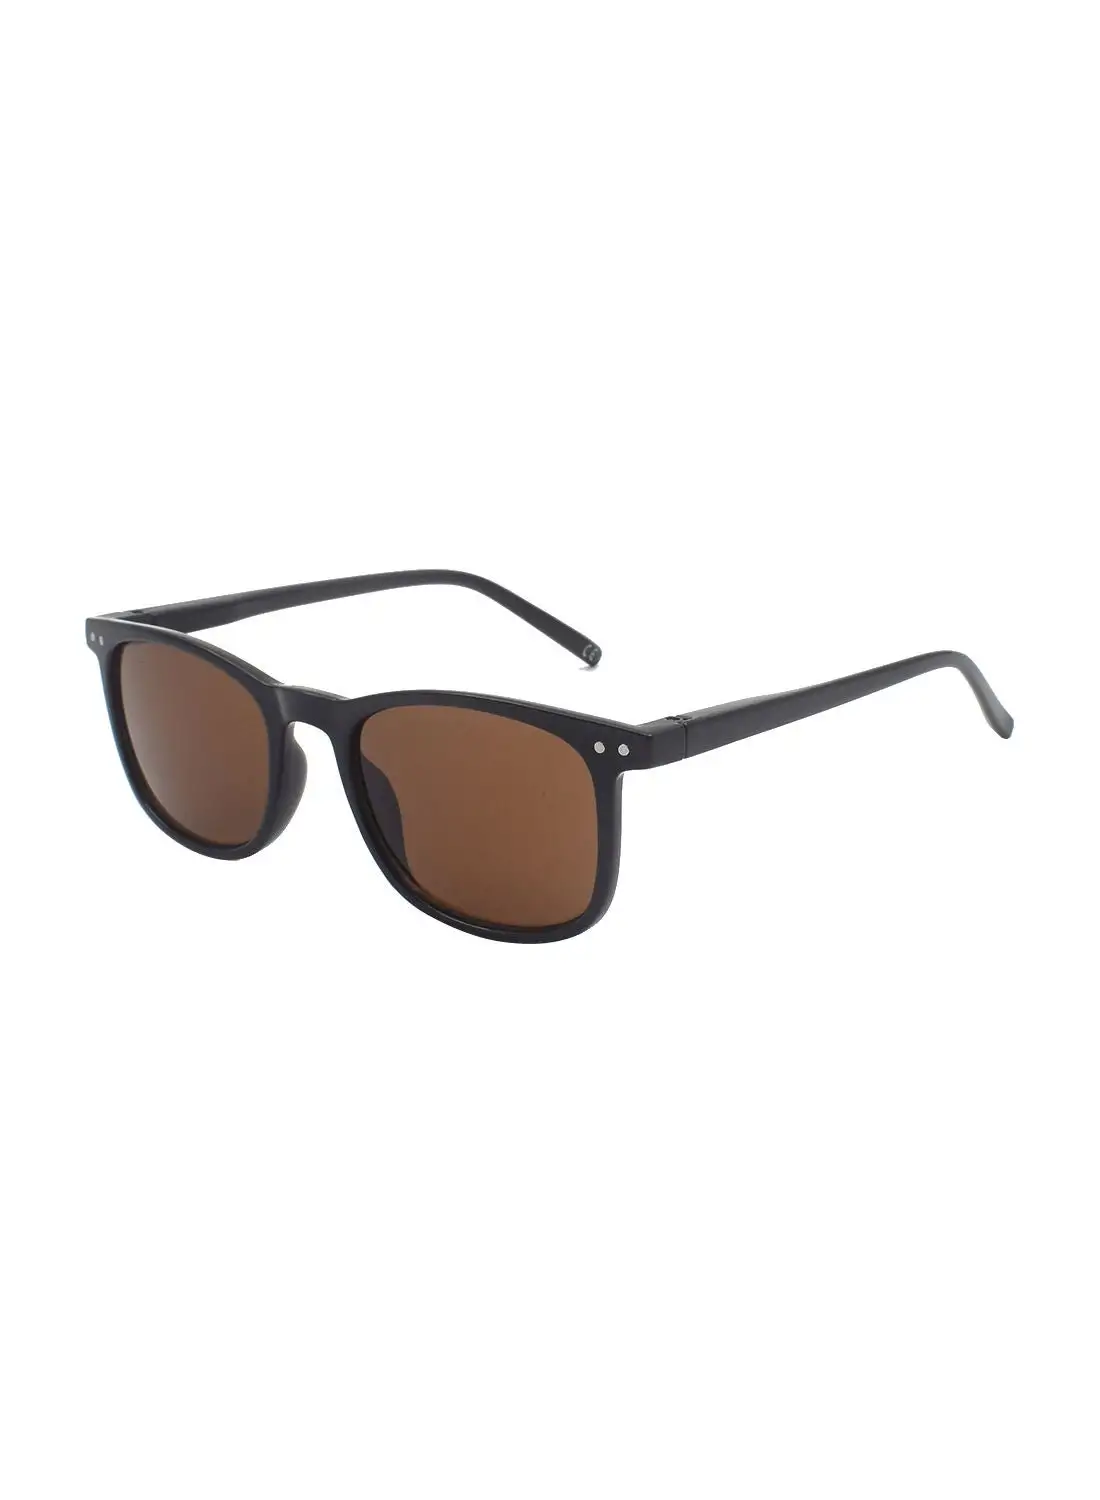 MADEYES Rectangular Sunglasses EE9S359-3